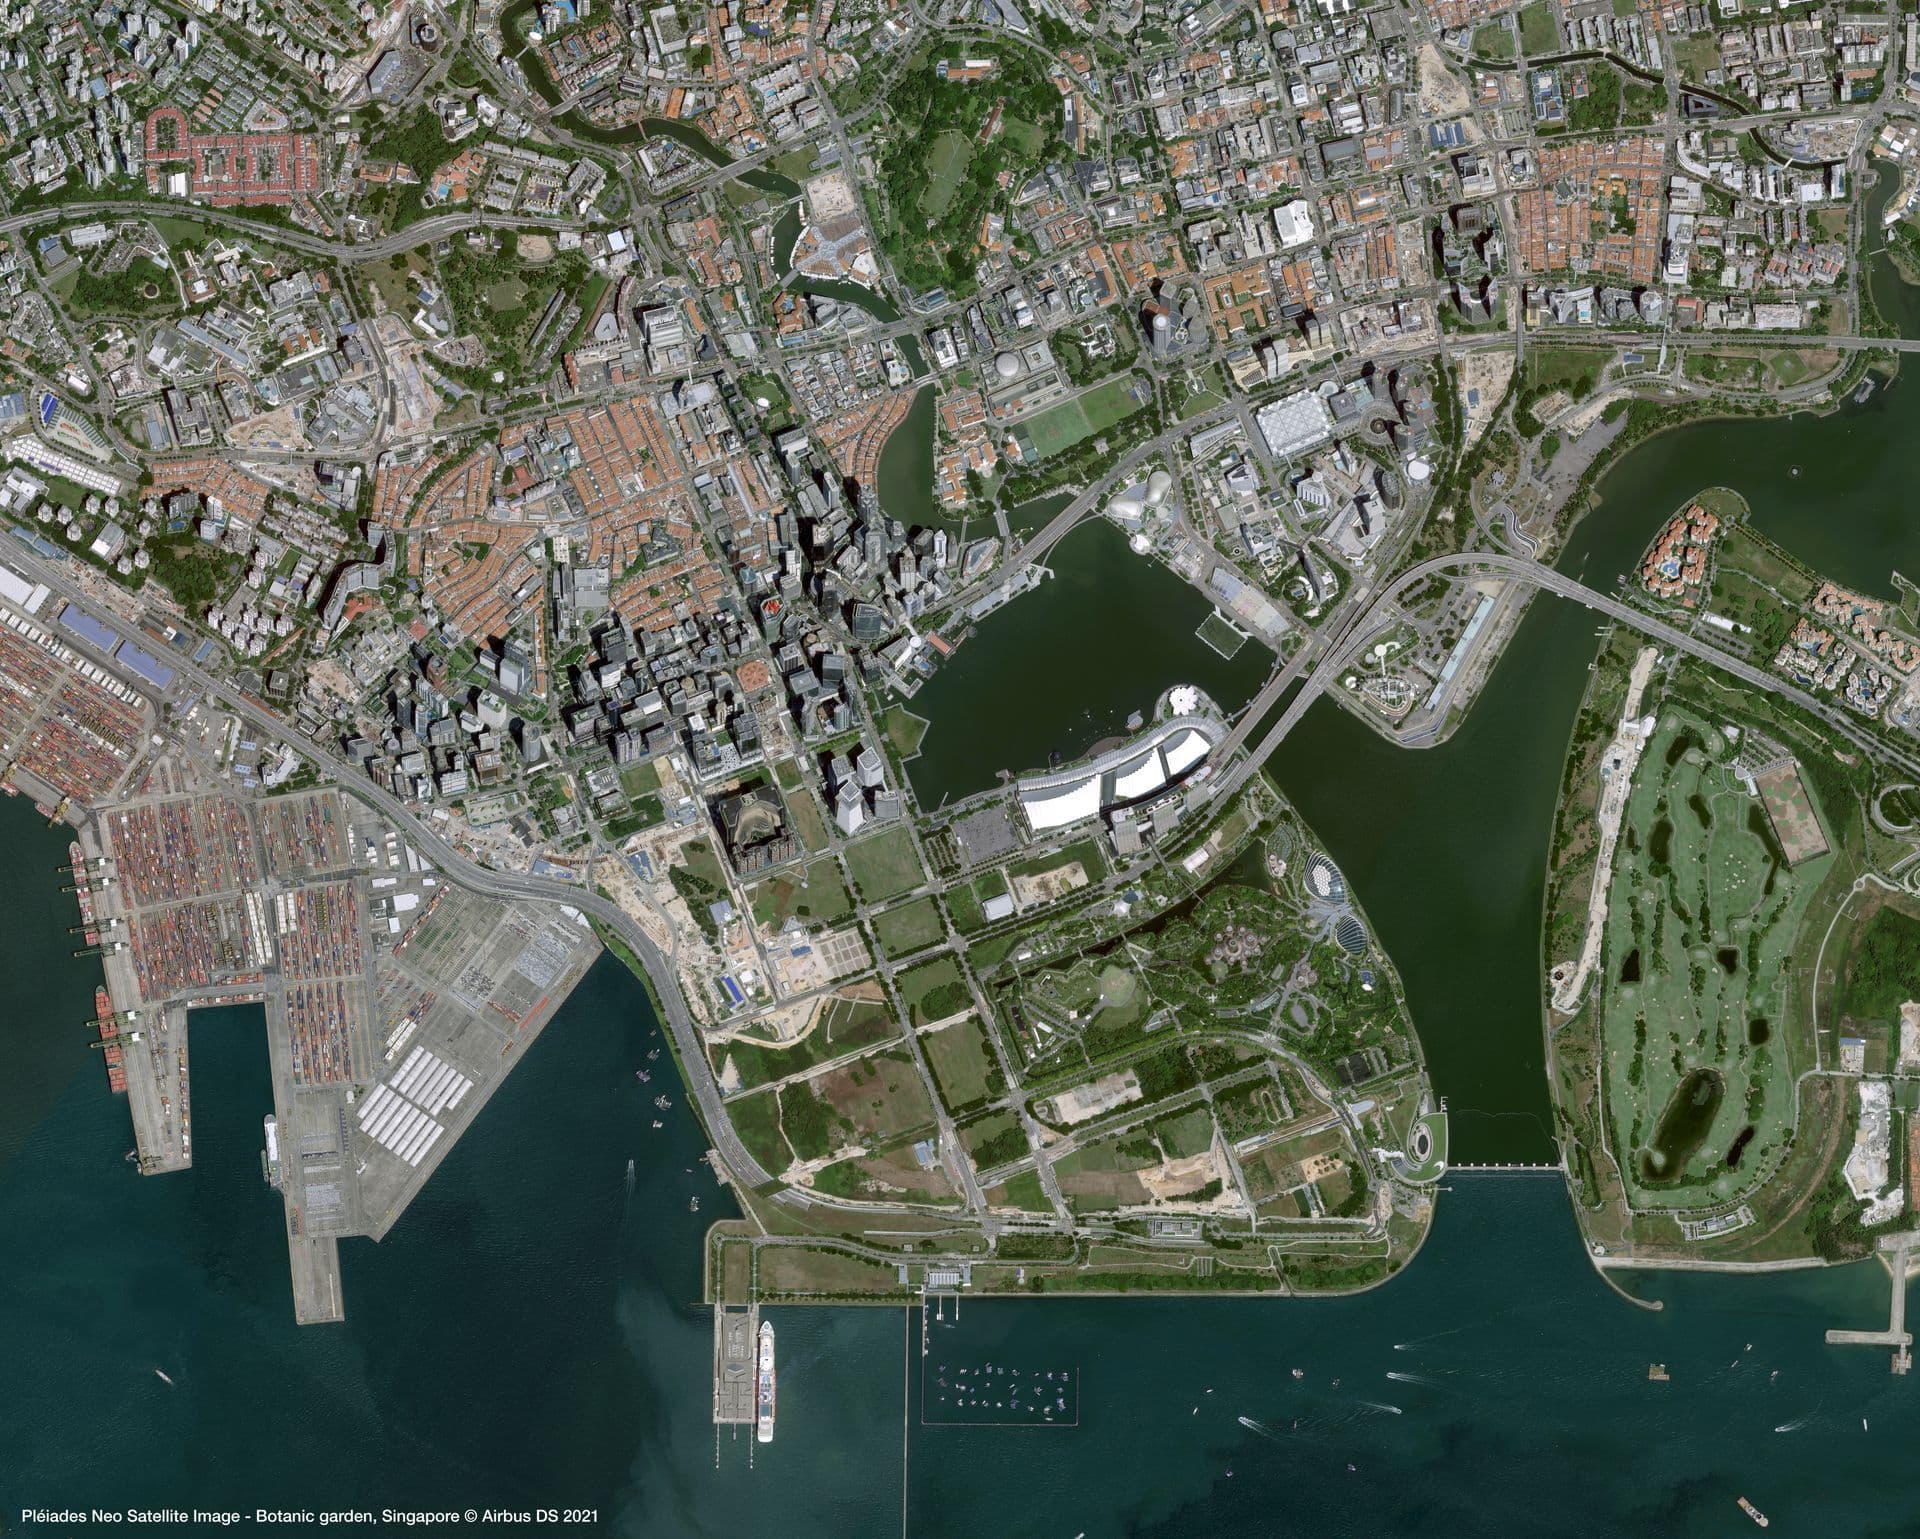 Botanic garden, Singapore high quality satellite image | Pléiades Neo